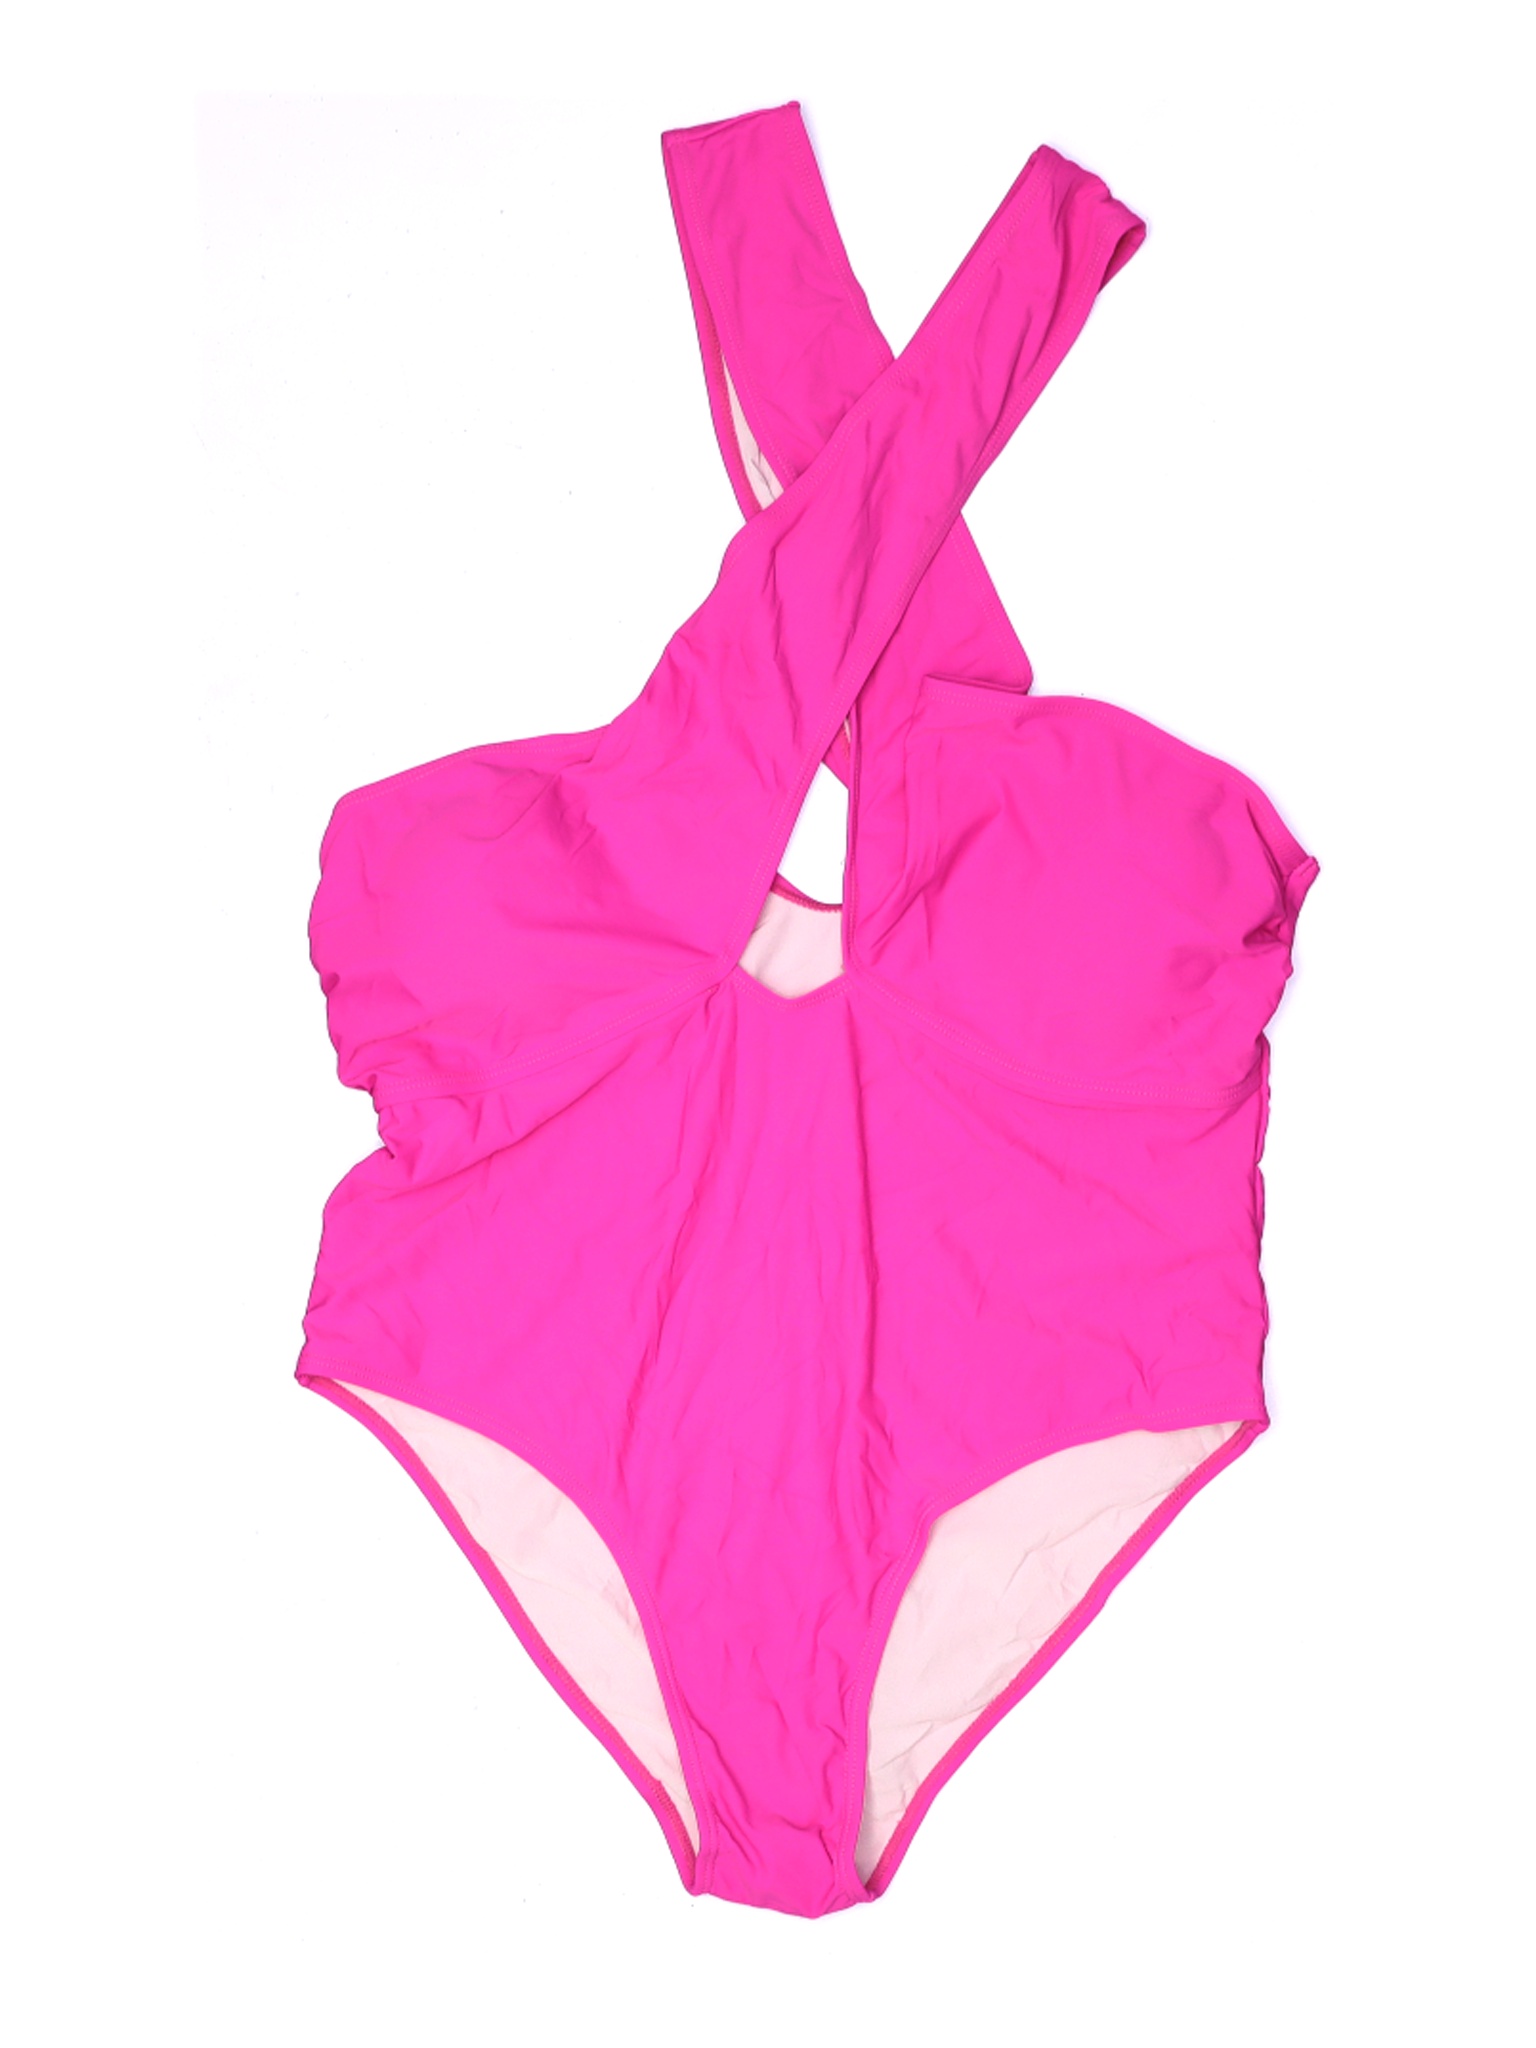 Shein Women Pink One Piece Swimsuit 3X Plus | eBay